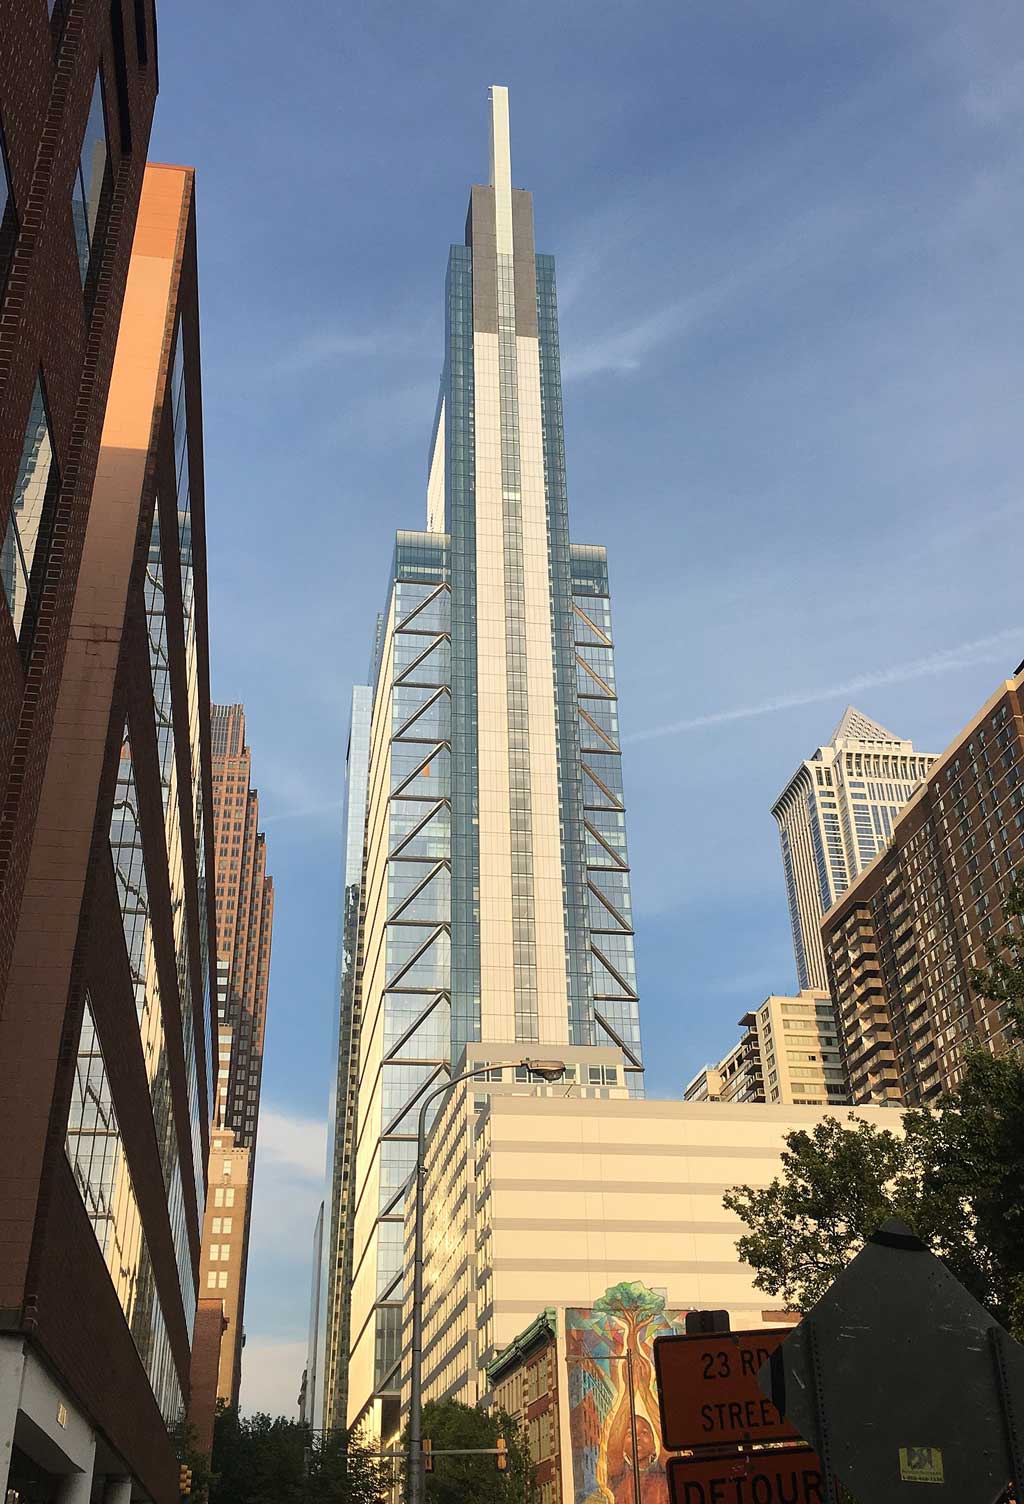 Comcast Technology Center is the tallest skyscraper in Philadelphia